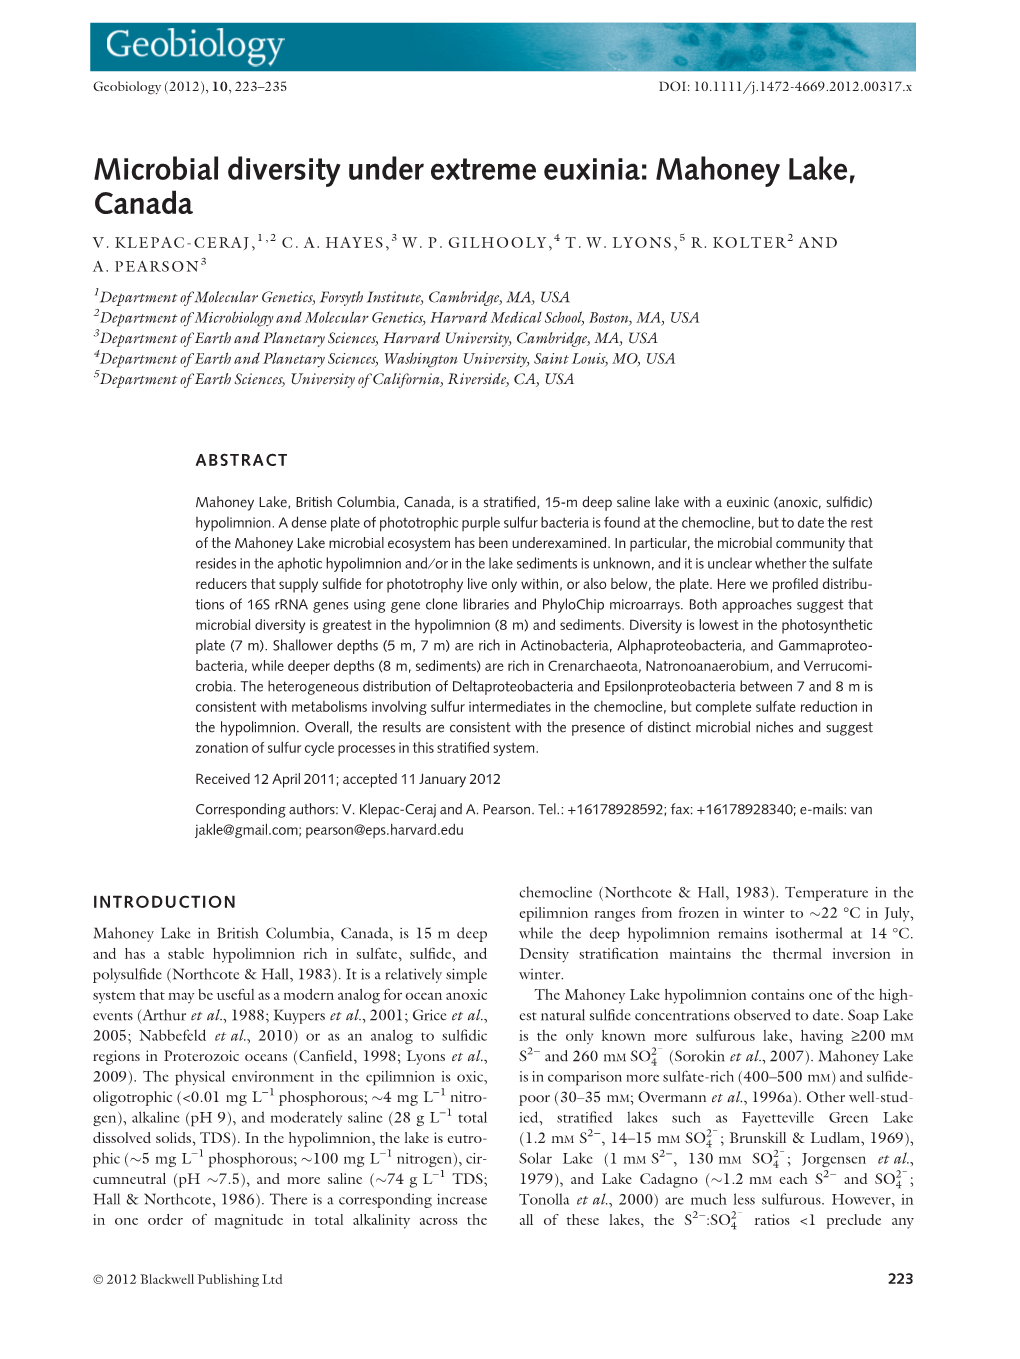 Microbial Diversity Under Extreme Euxinia: Mahoney Lake, Canada V